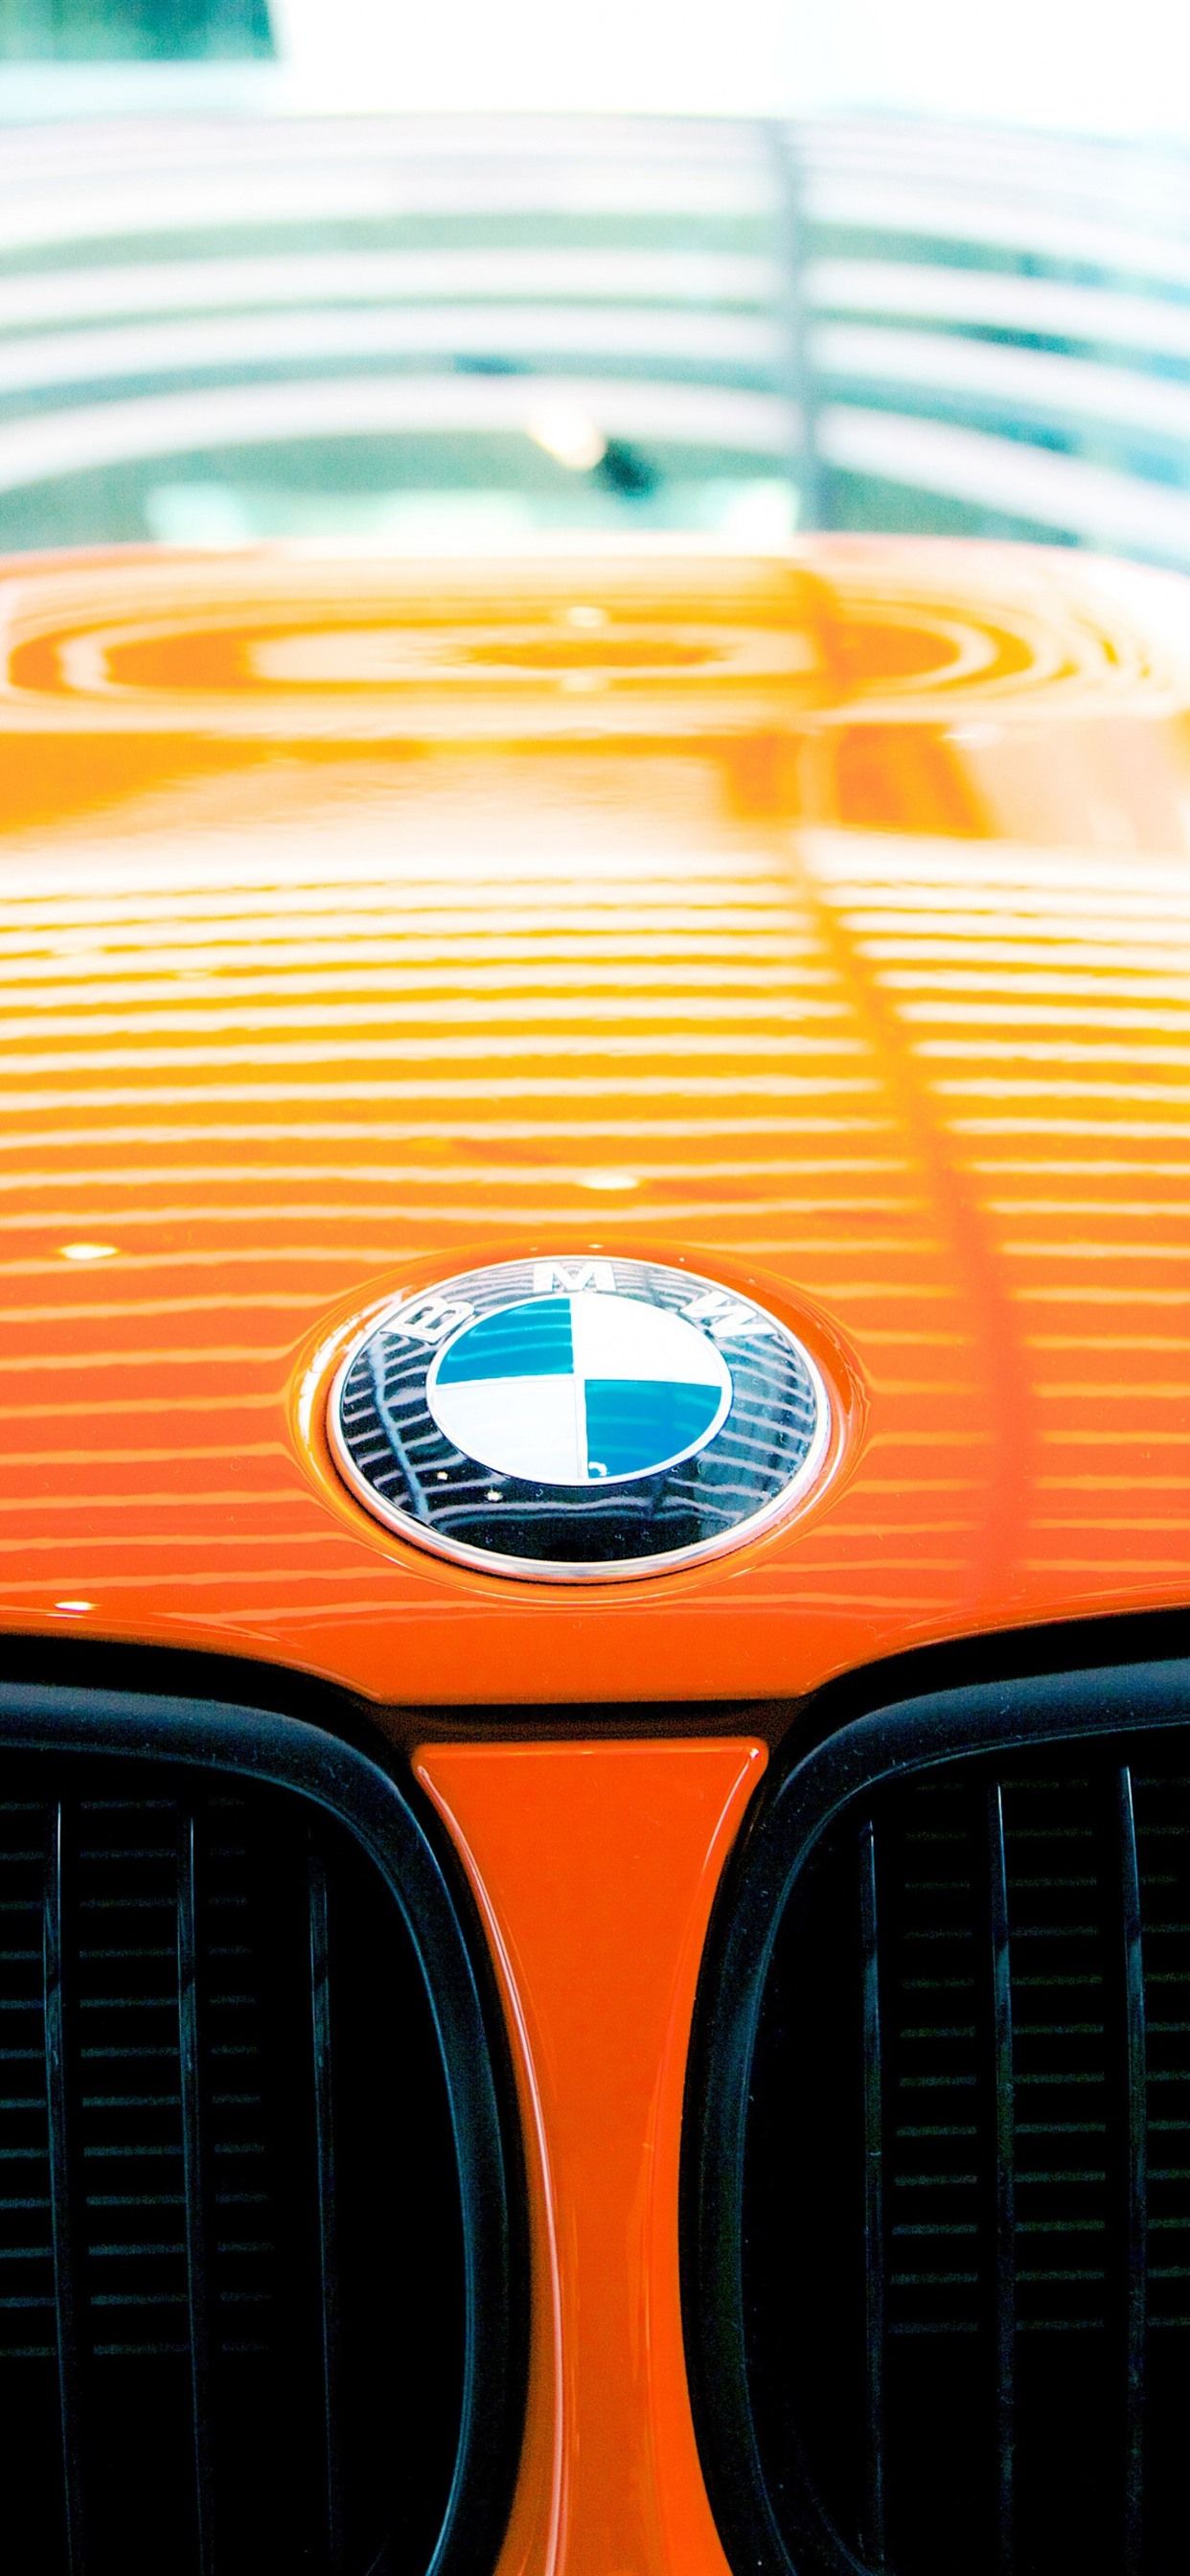 Wallpaper BMW logo, orange car 5120x2880 UHD 5K Picture, Image